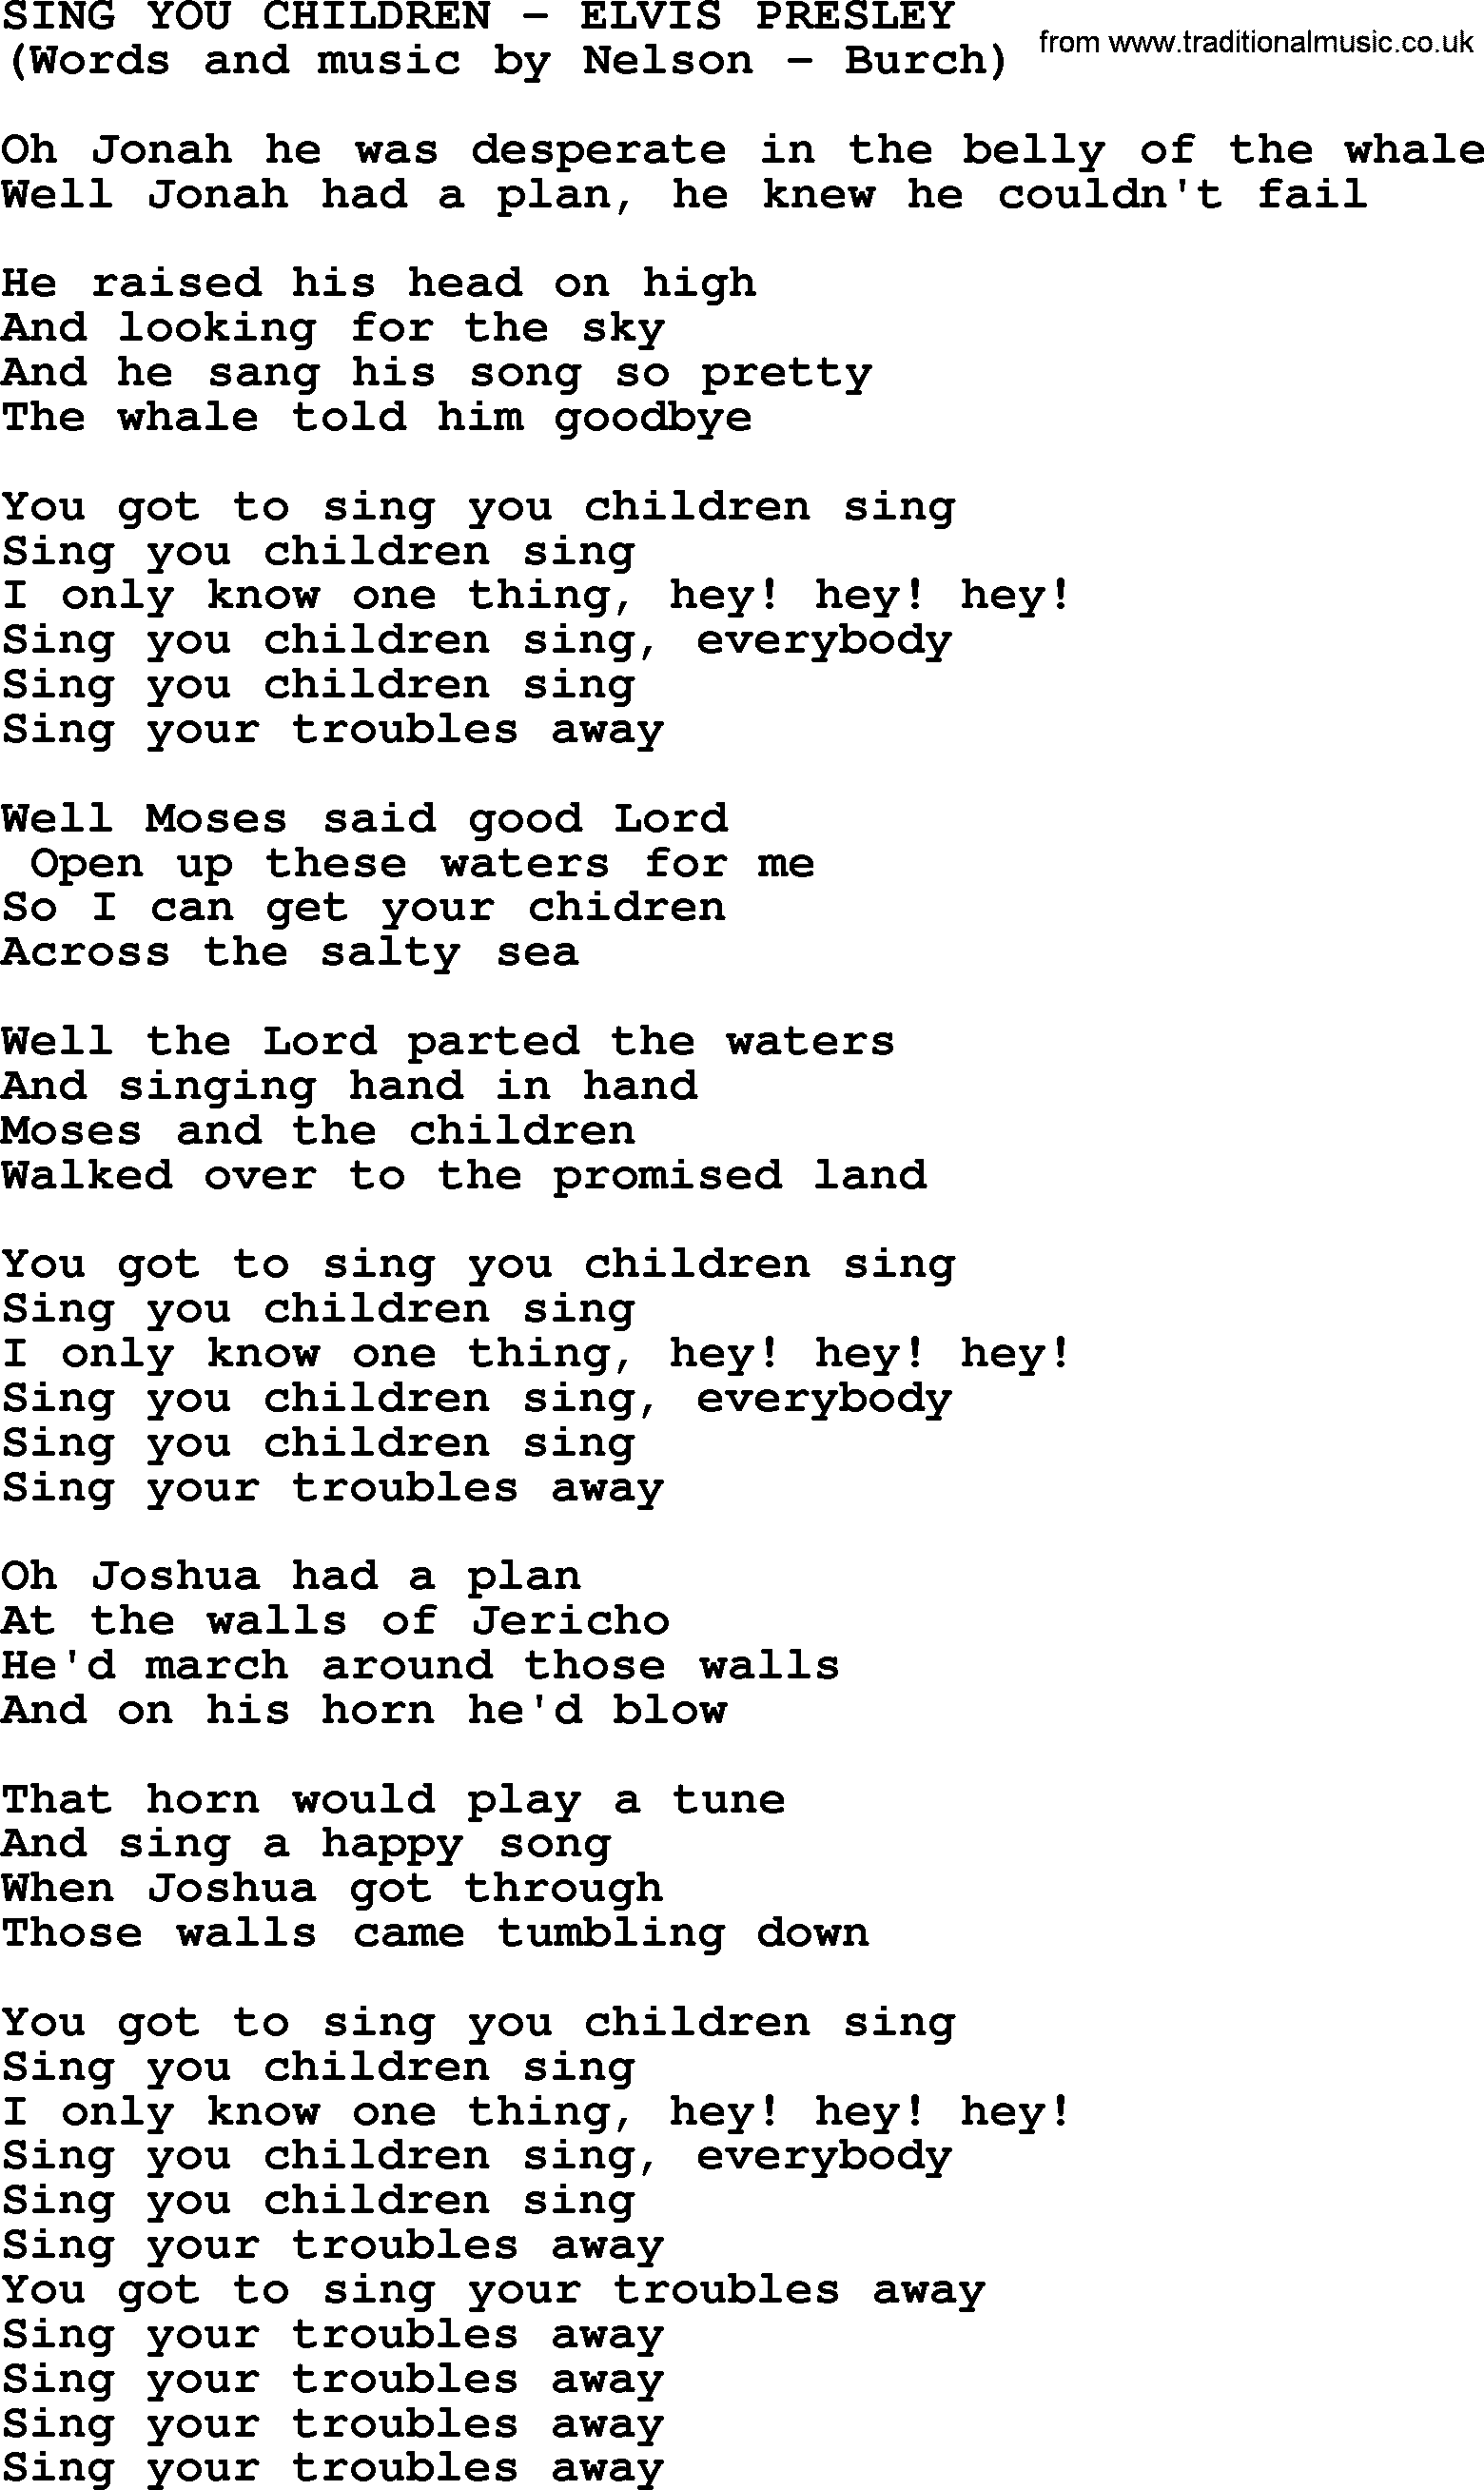 Elvis Presley song: Sing You Children lyrics